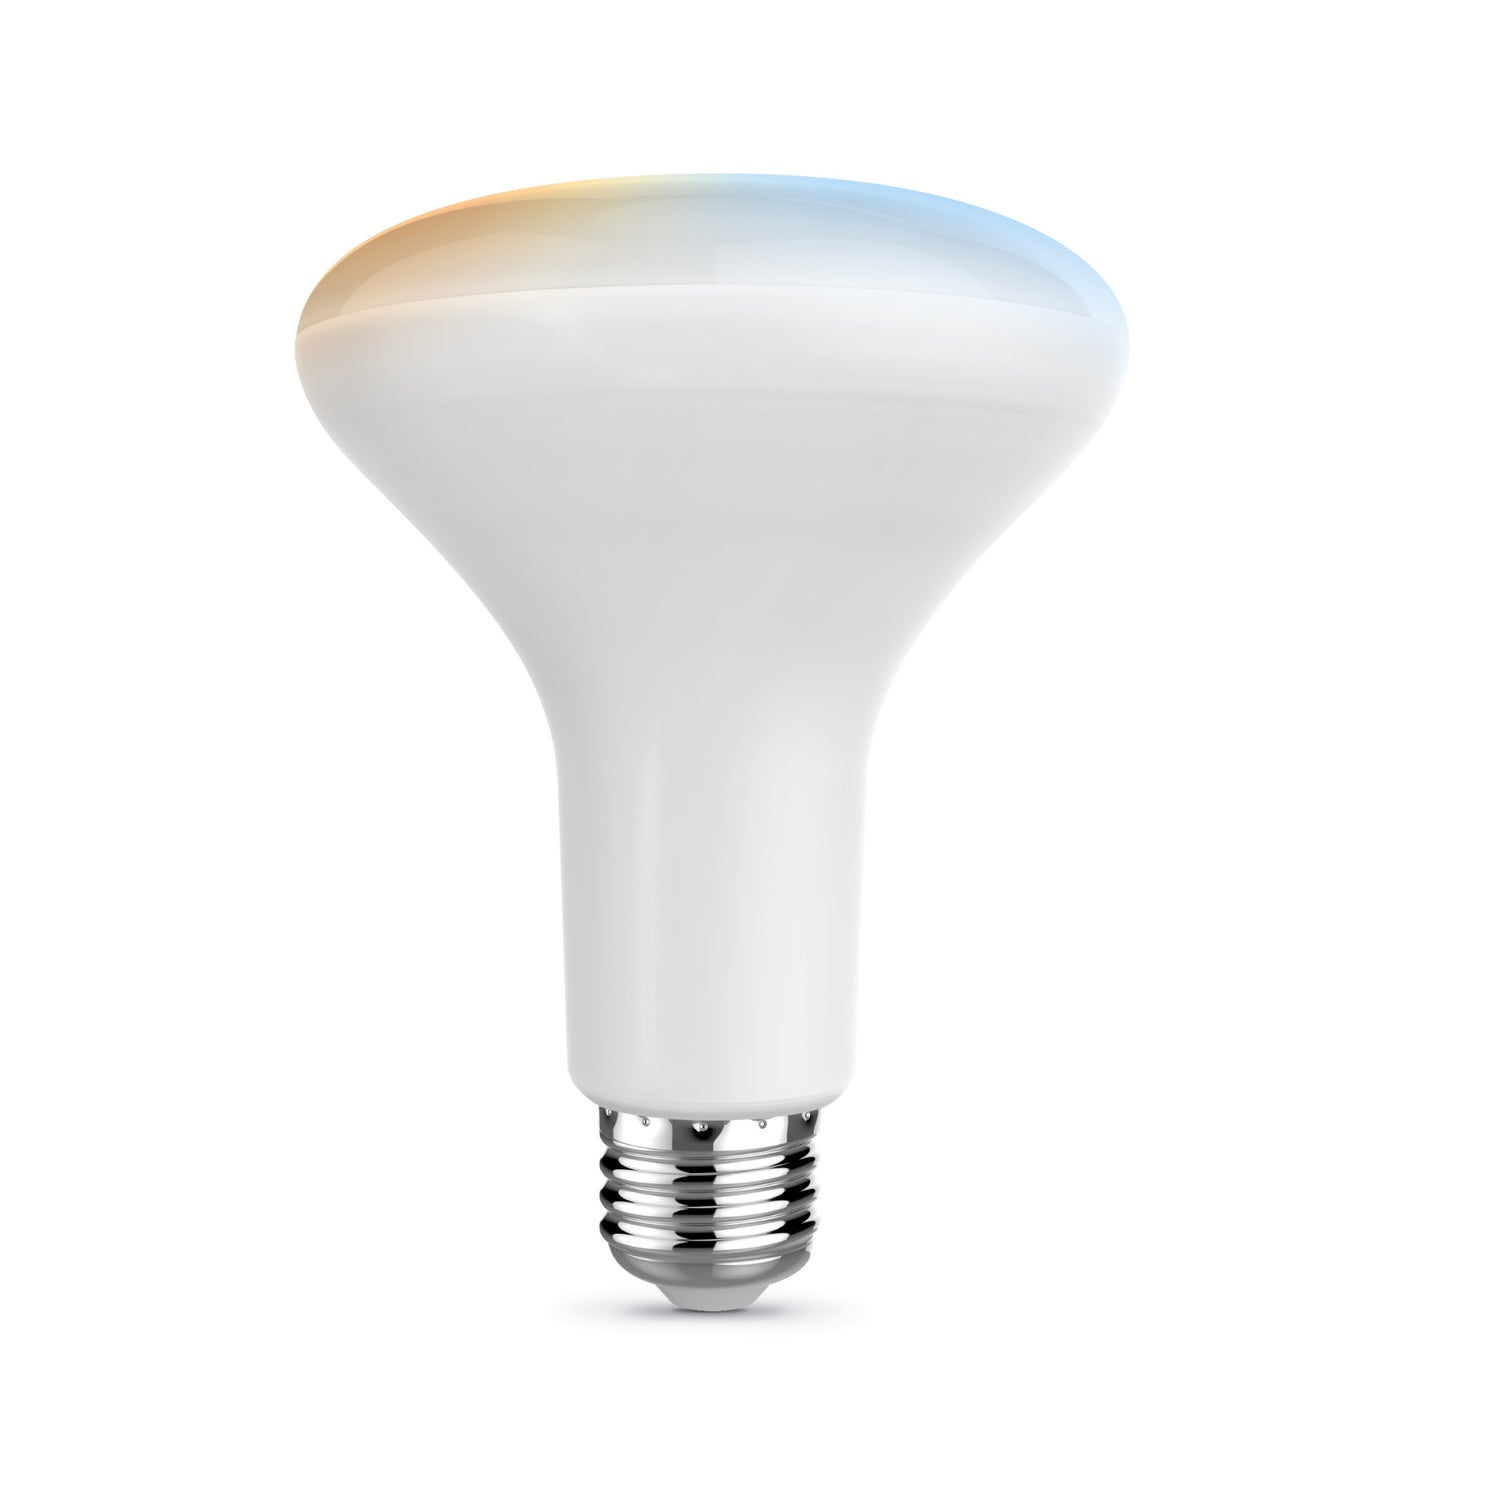 7.2W (65W Replacement) Tunable White E26 Base BR30 Smart Wi-Fi Light Bulb